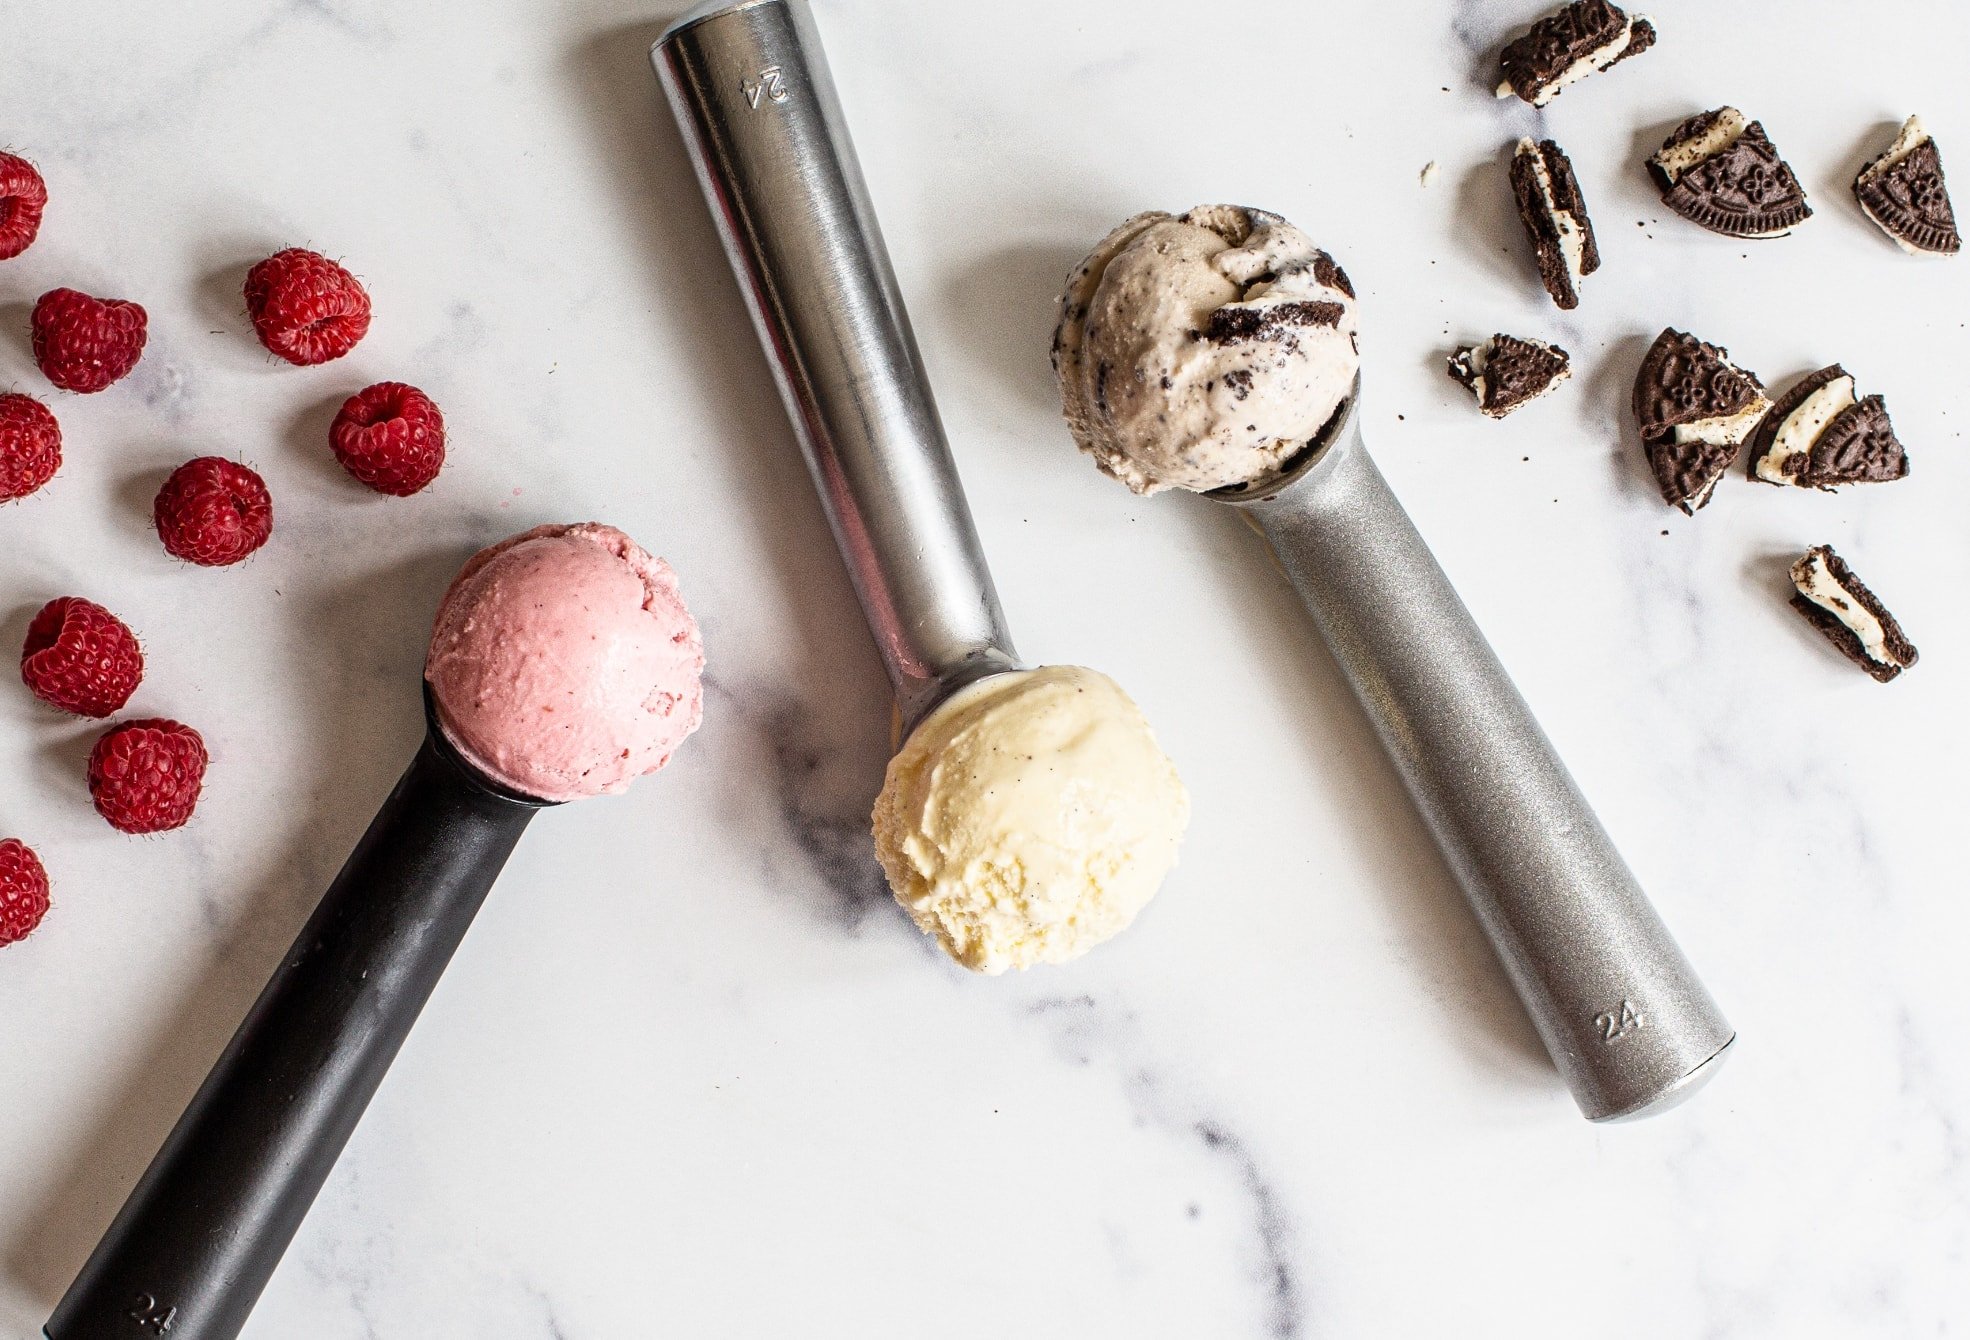 three ice cream scoops of fresh homemade ice cream - one strawberry, one vanilla and one cookies and cream